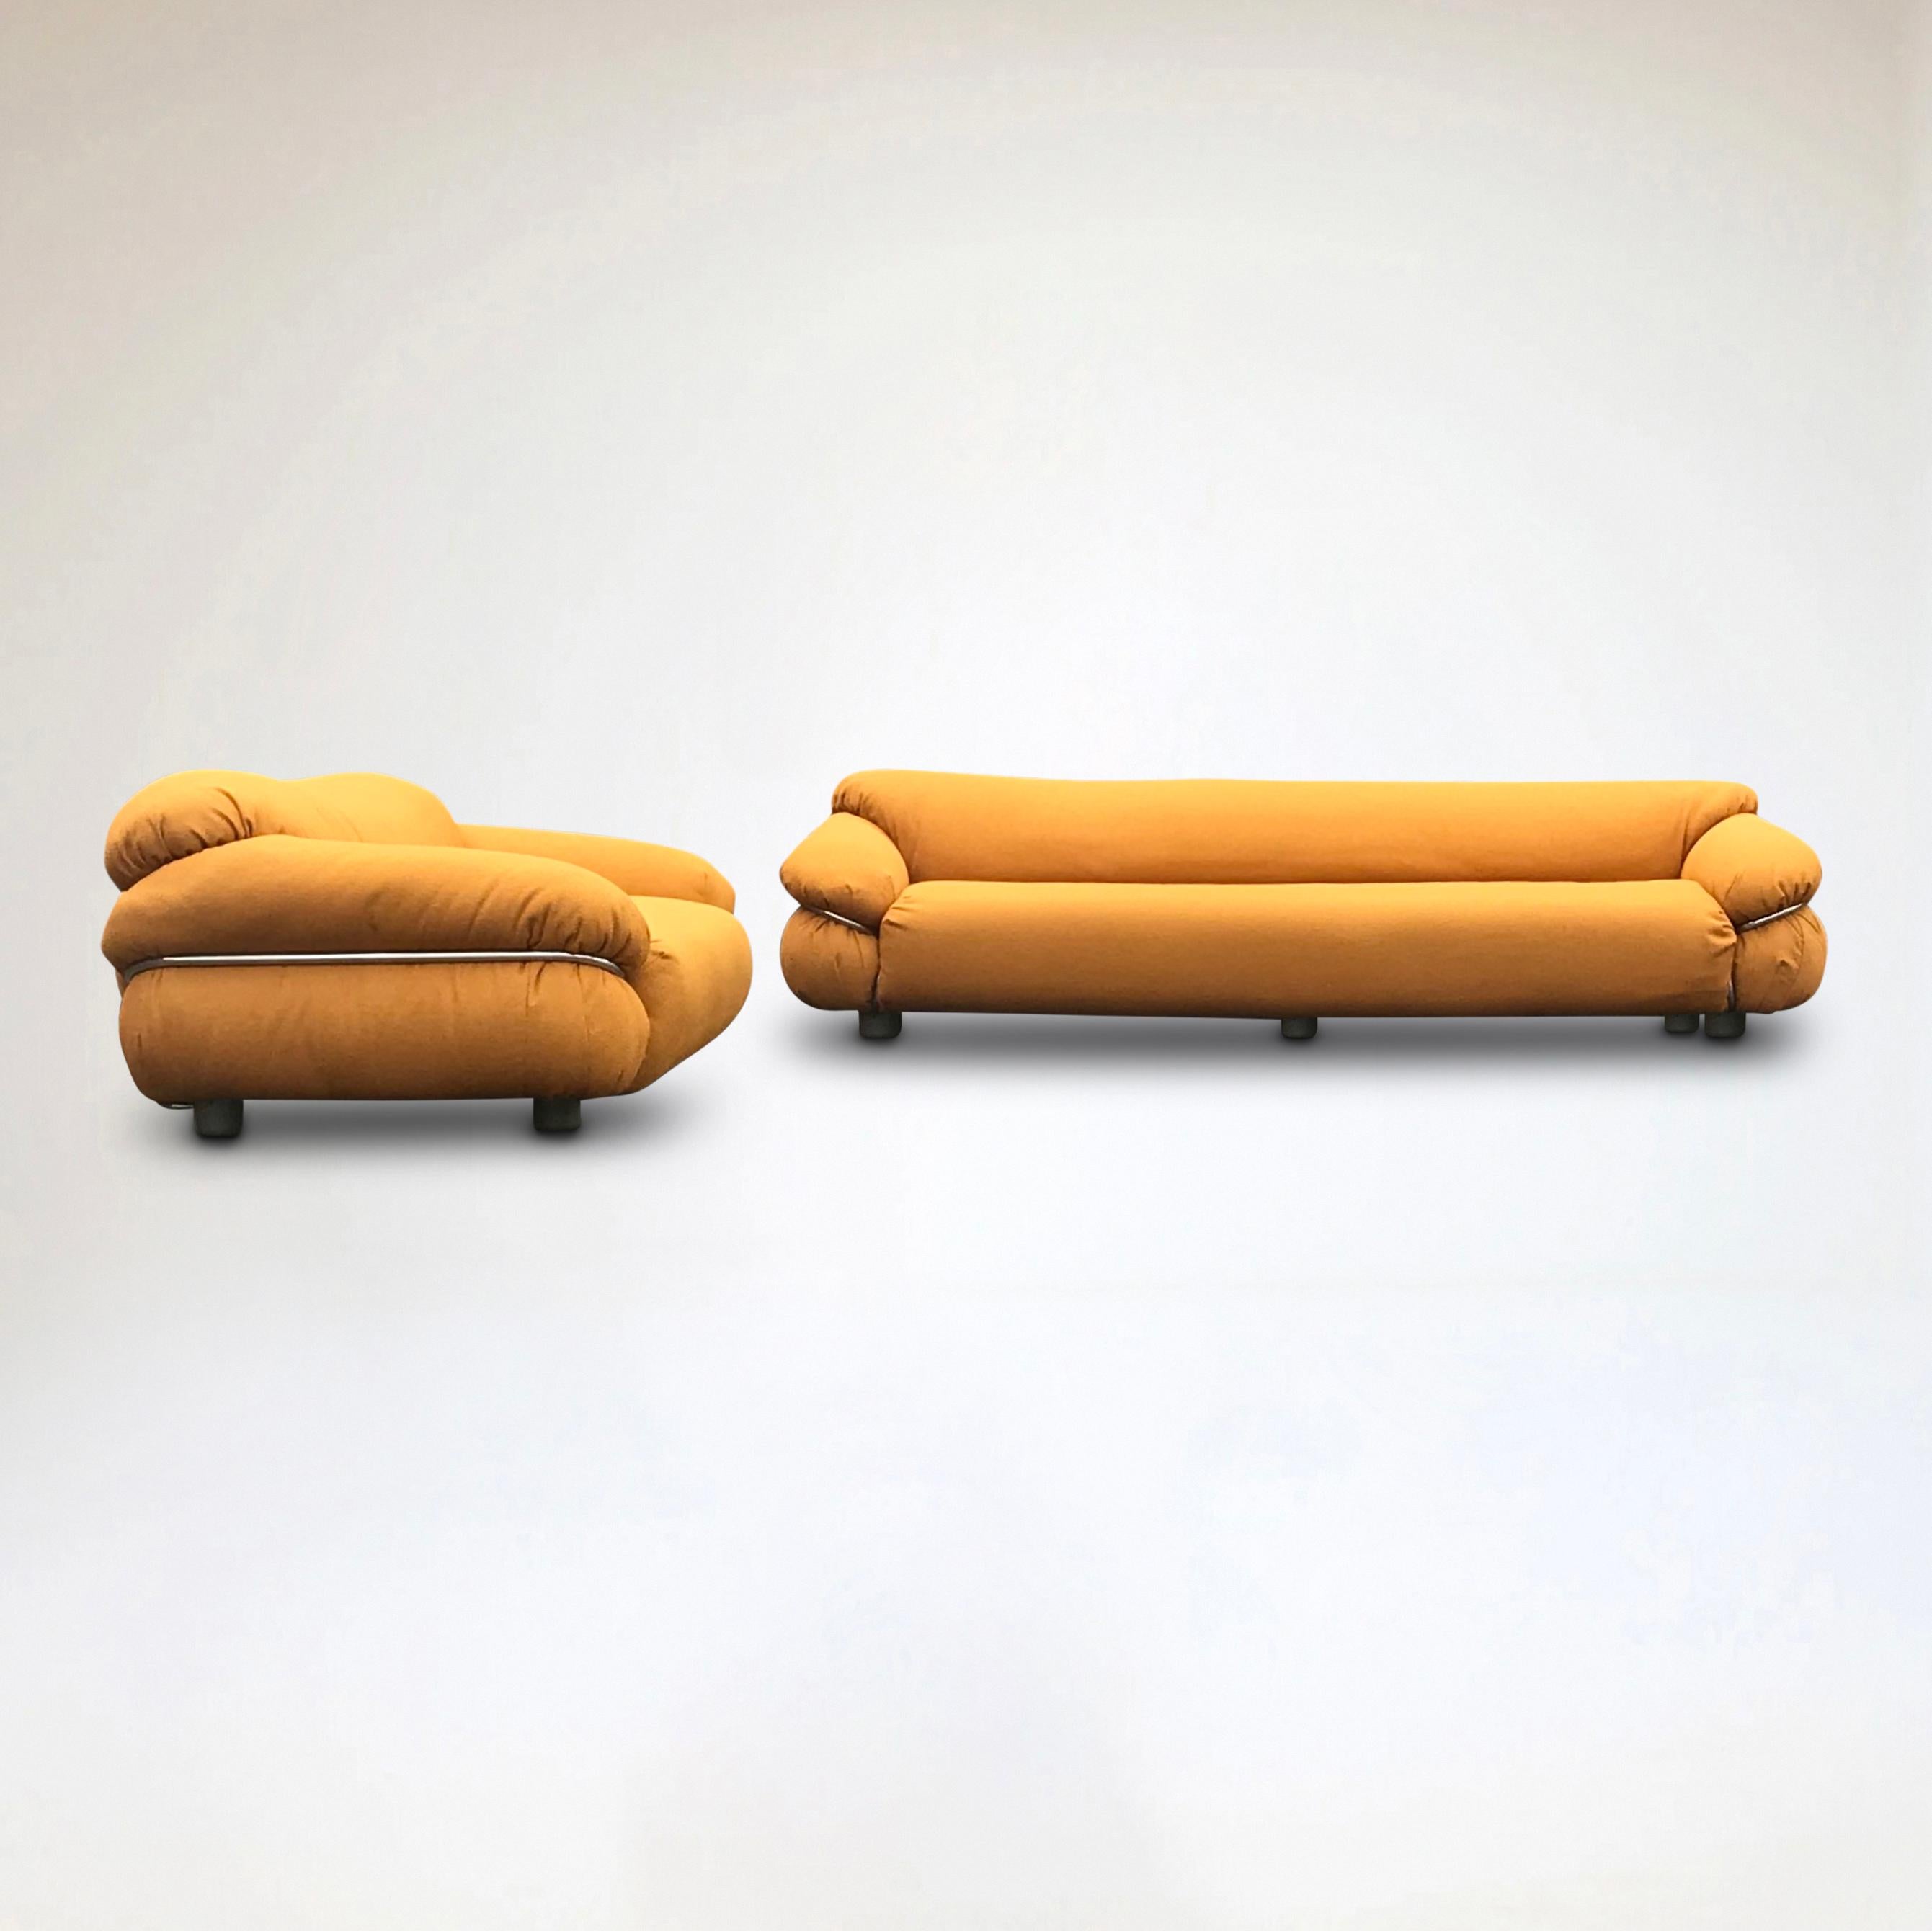 Late 20th Century Sesann yellow bouclé sofa by Gianfranco Frattini for Cassina 1970s, set of 2 For Sale